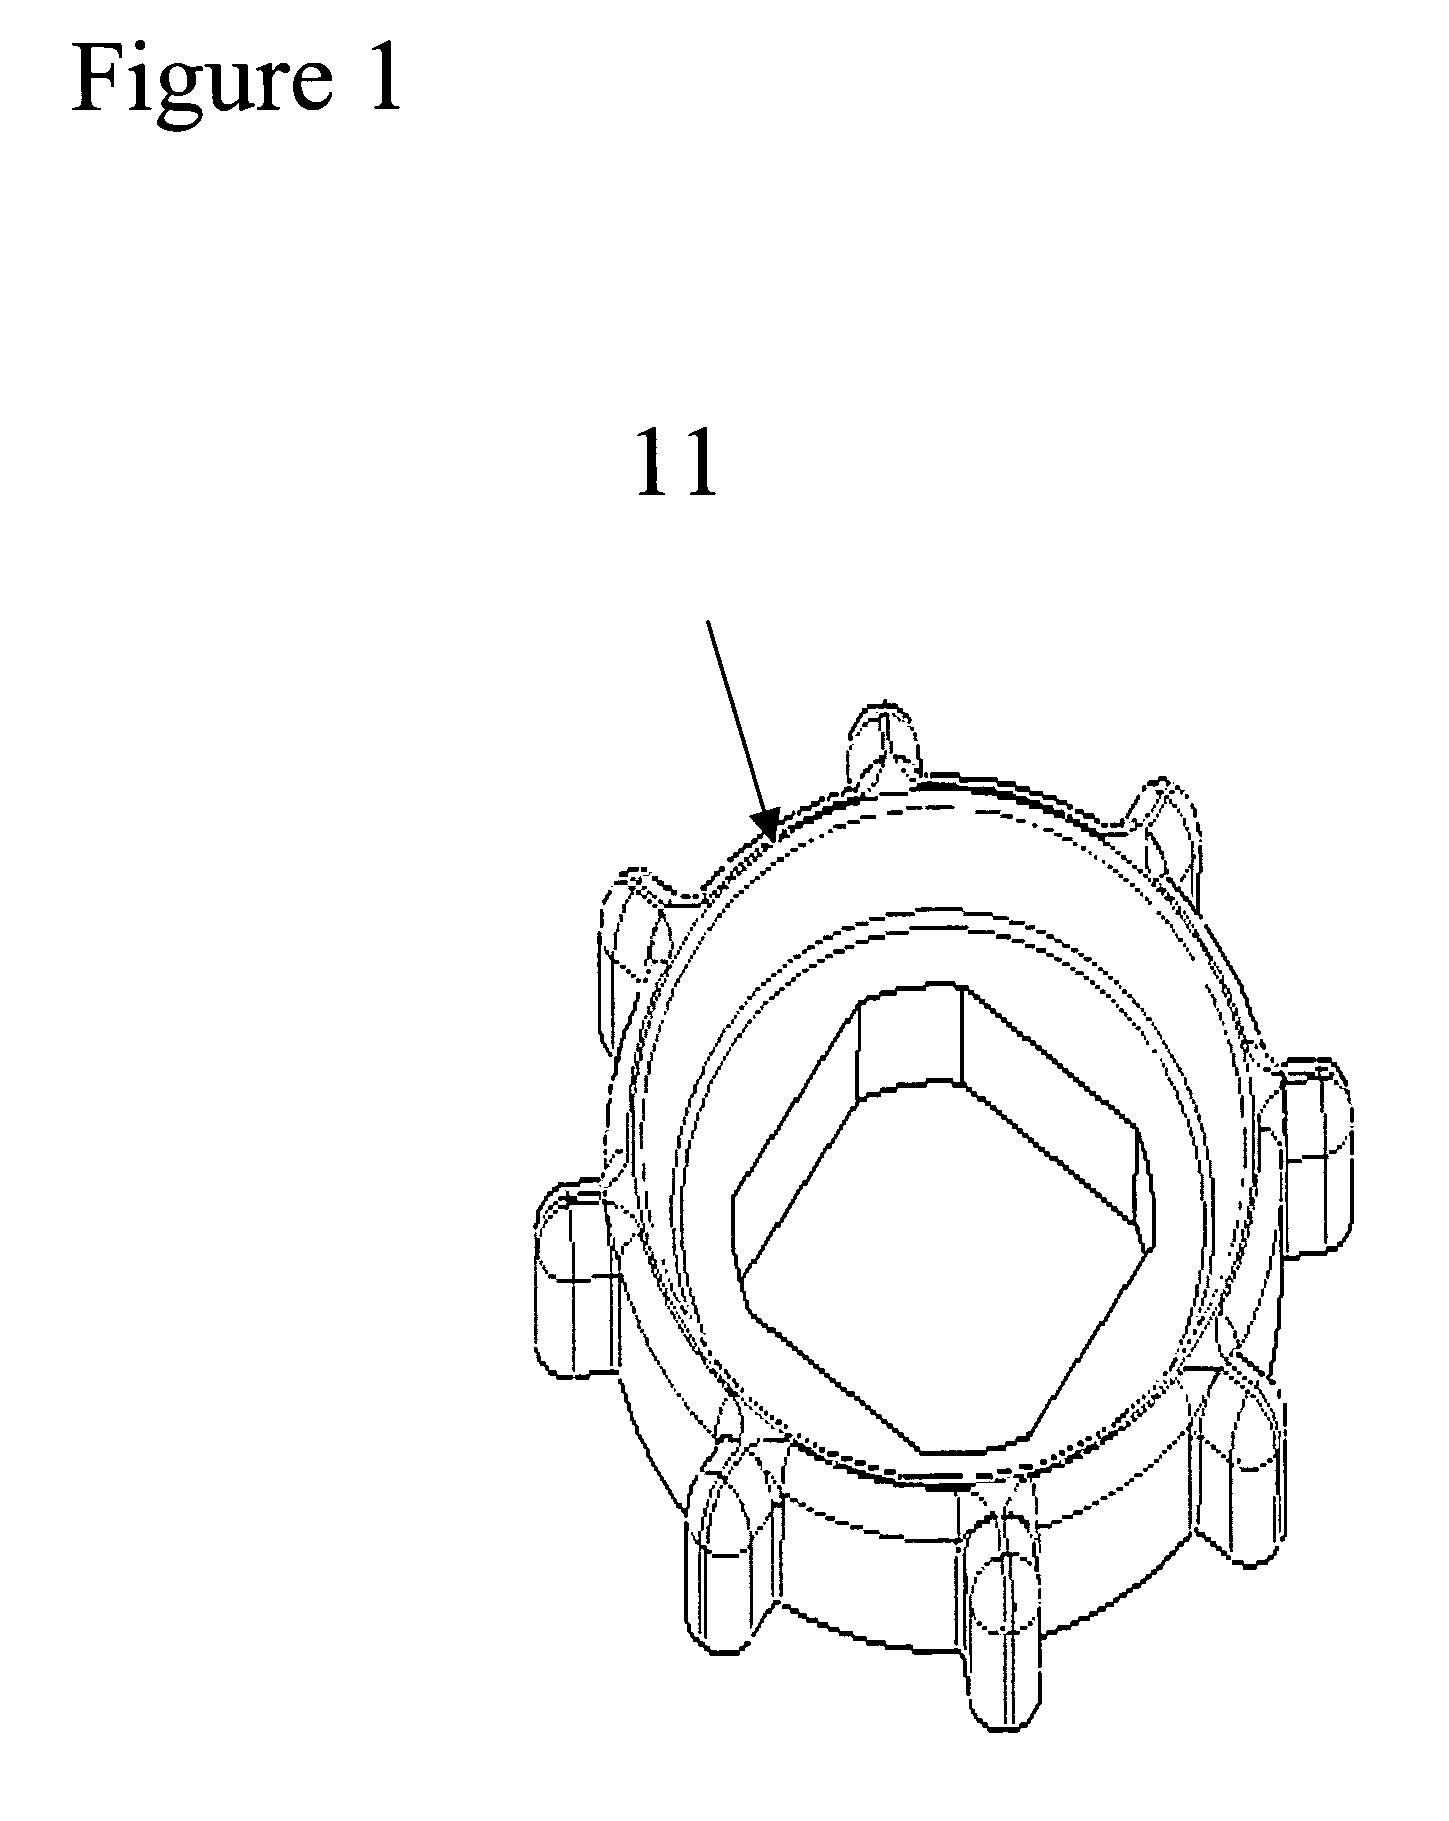 Floating clutch for dual concentric shafts arrangement